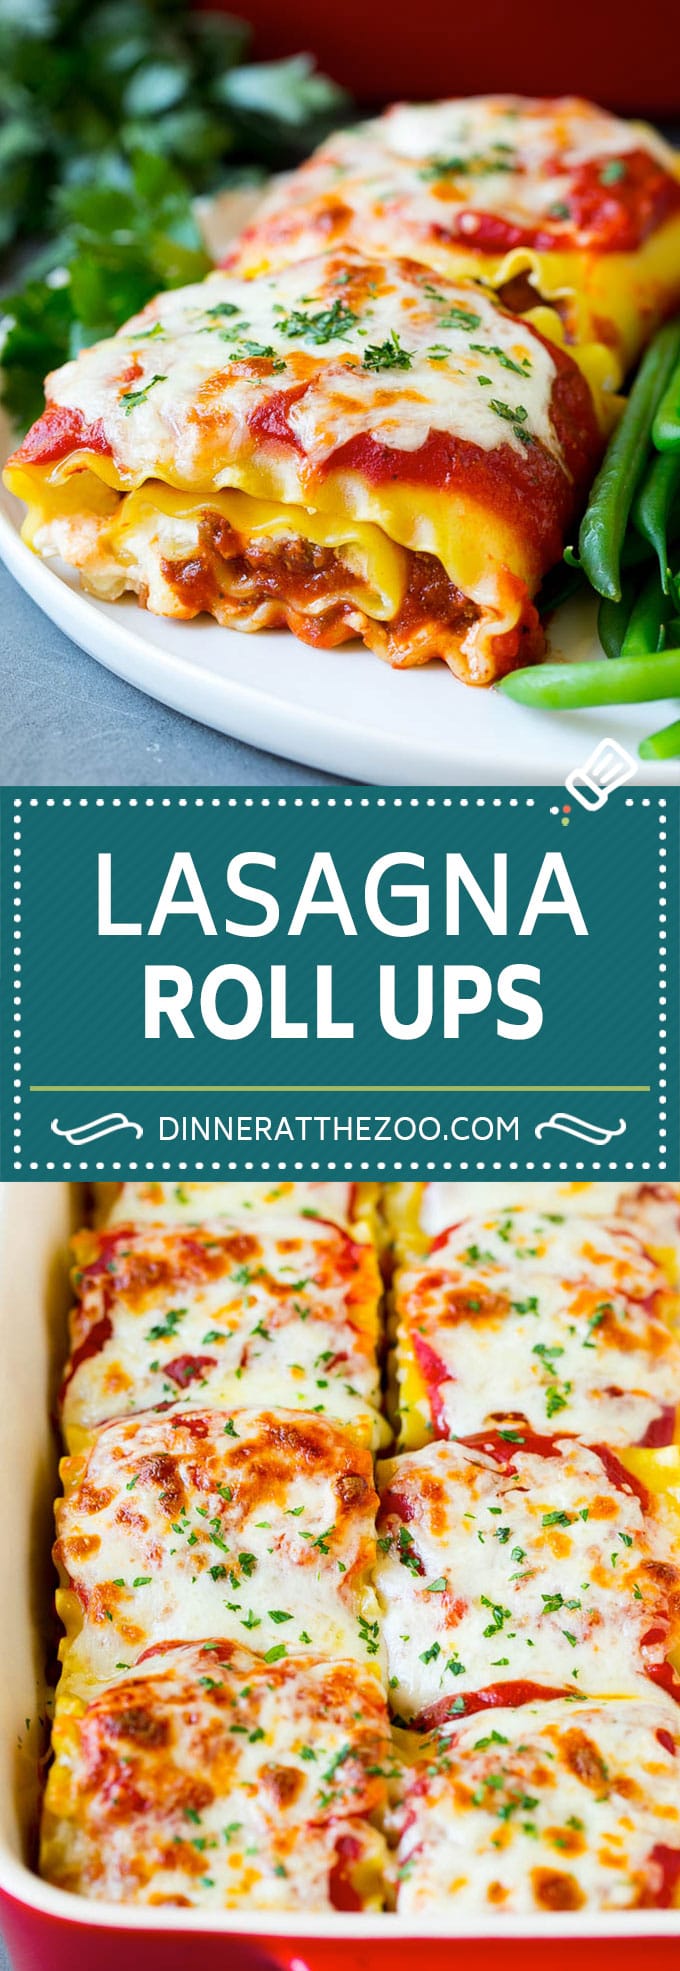 Lasagna Roll Ups Recipe | Lasagna Rolls #lasagna #pasta #beef #cheese #dinner #dinneratthezoo